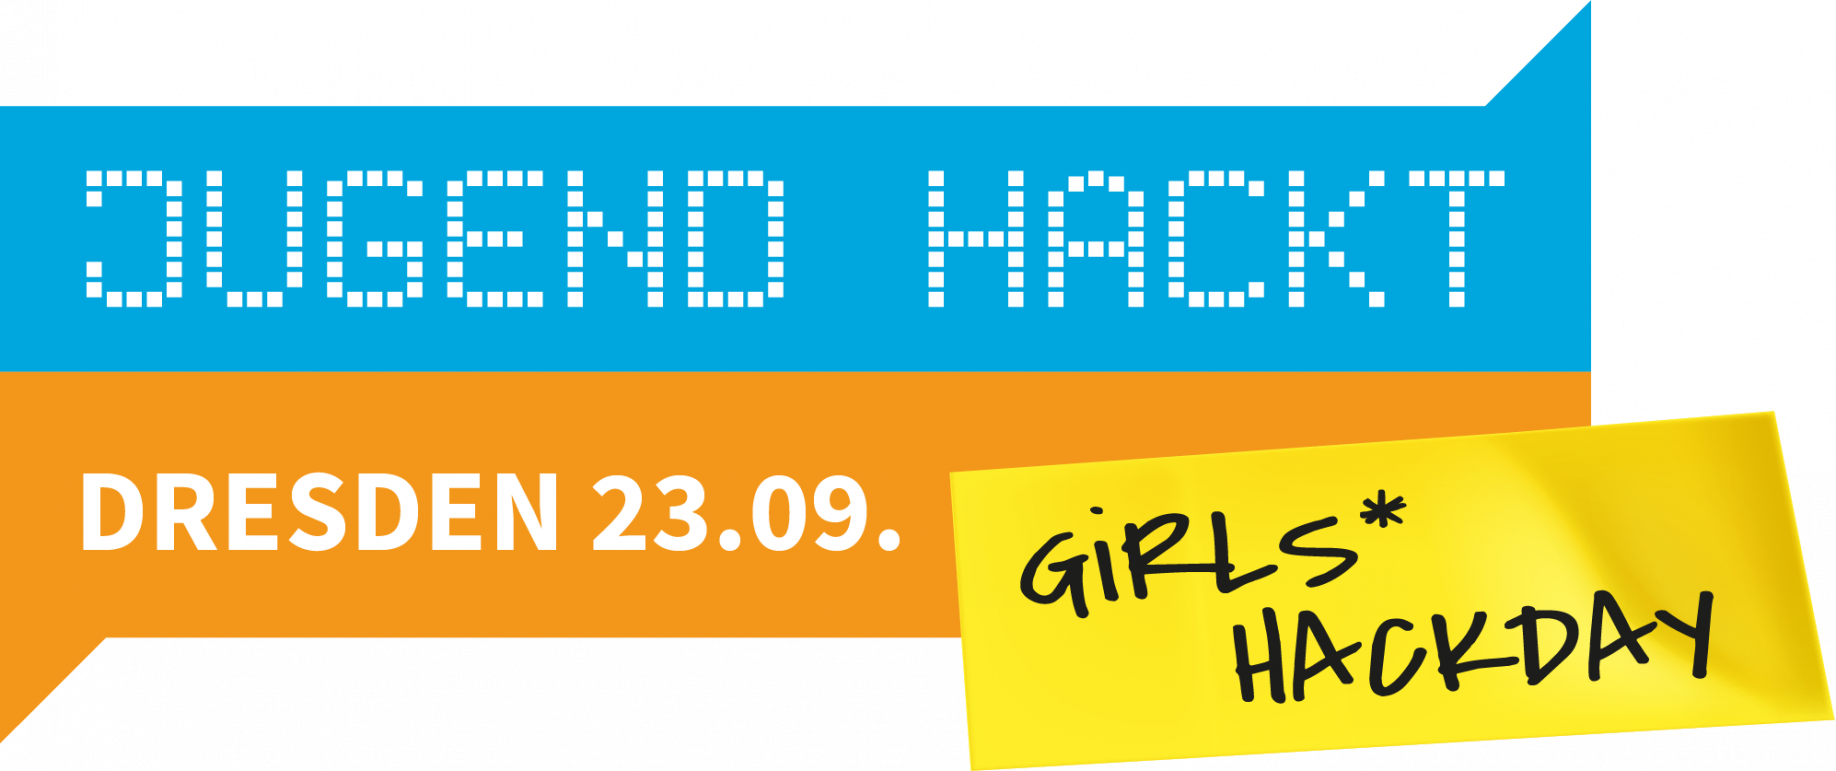 Jugend hackt Dresden 23.09 Girls*-Hackday